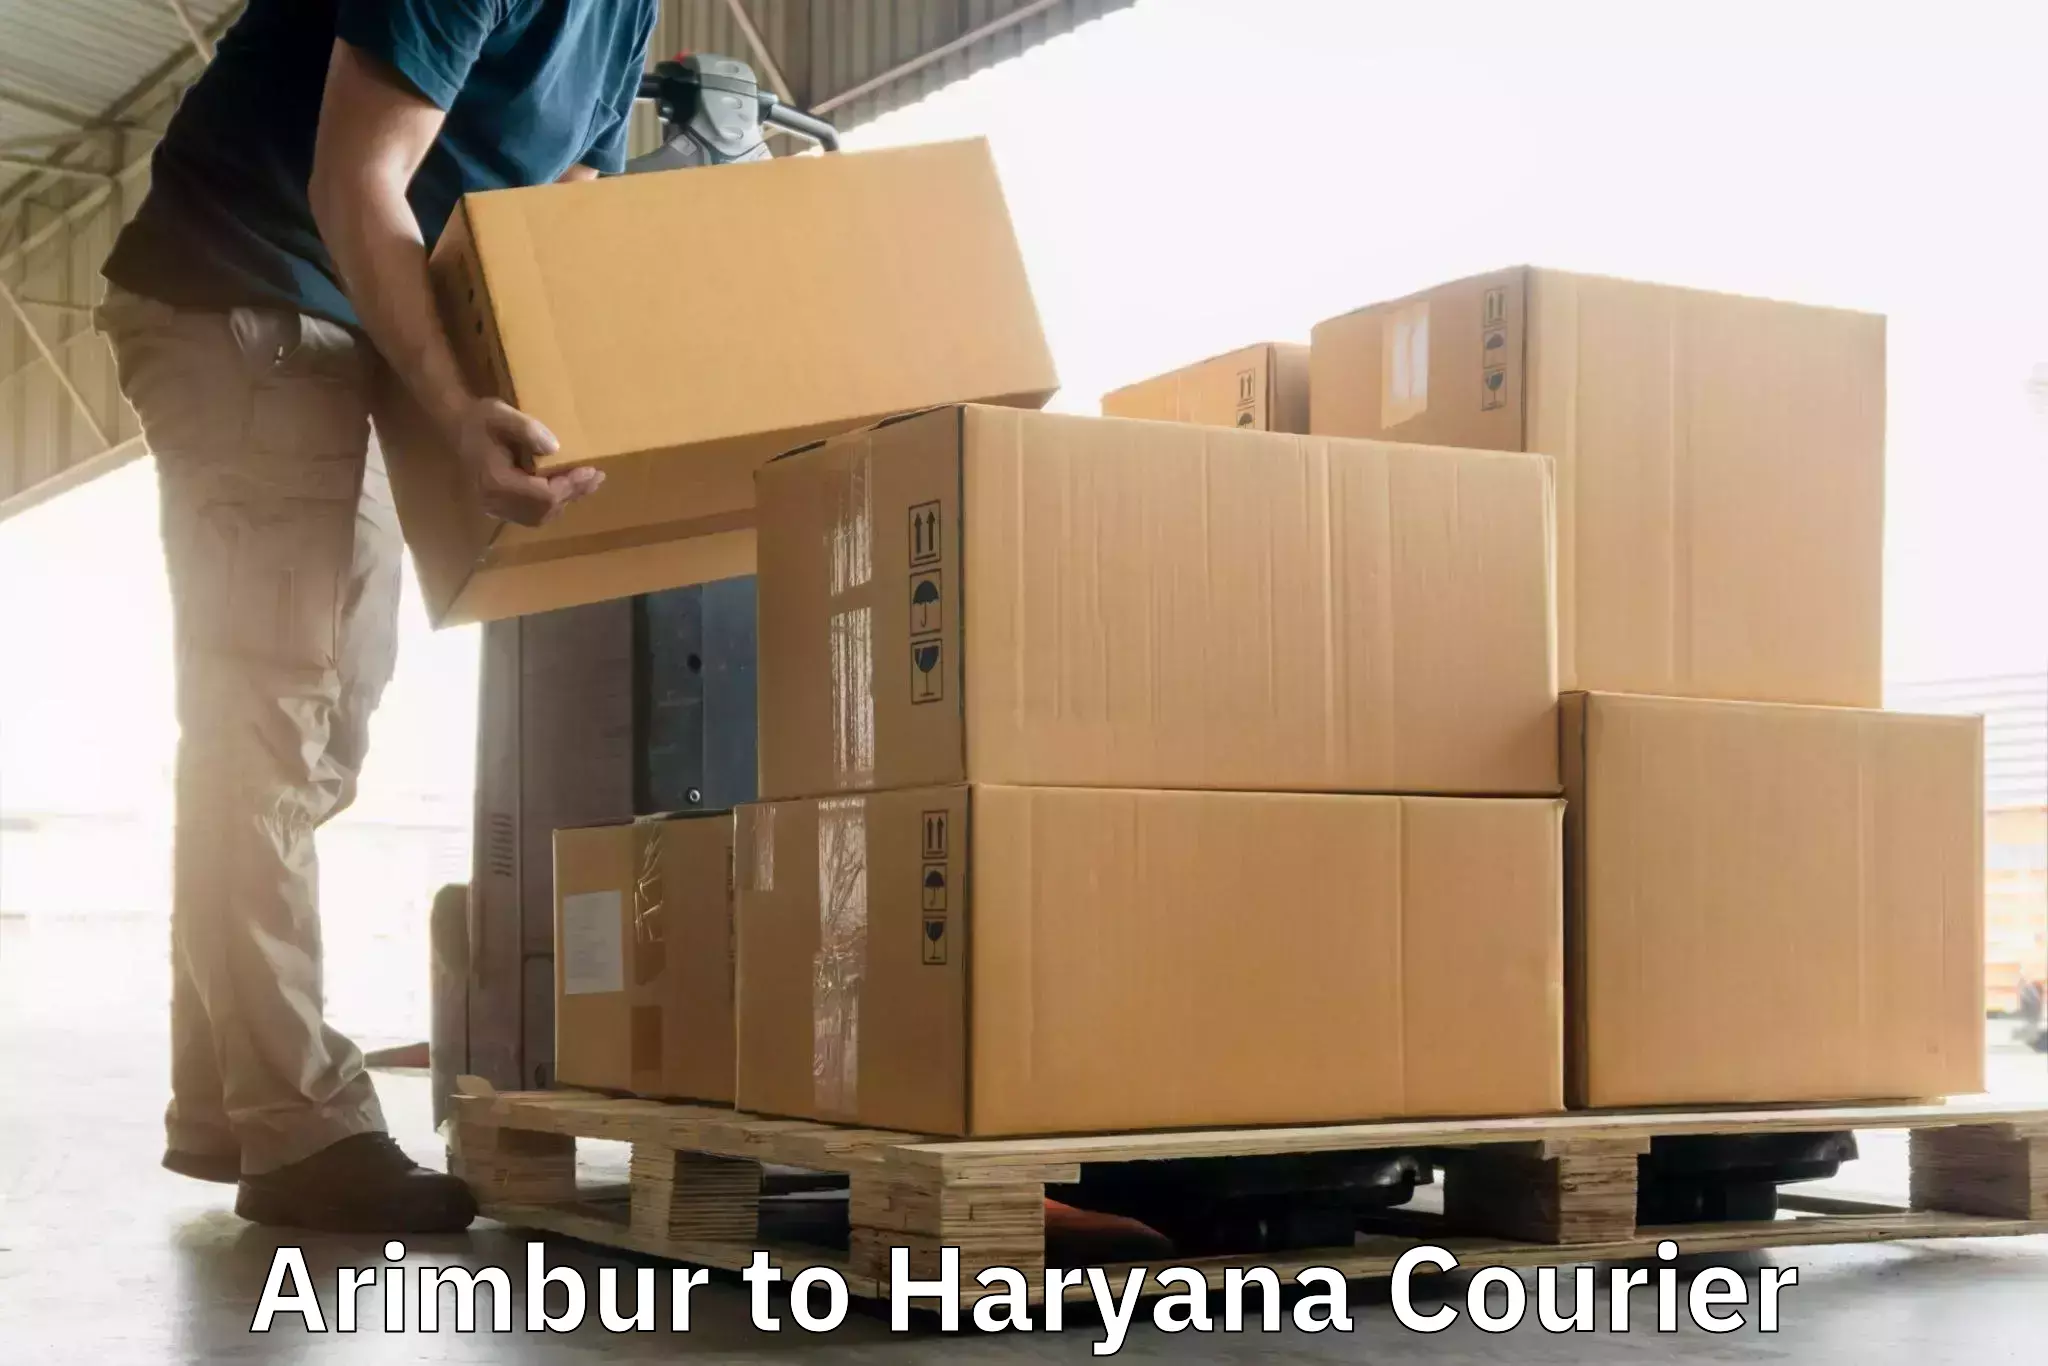 Global shipping networks Arimbur to Gurgaon